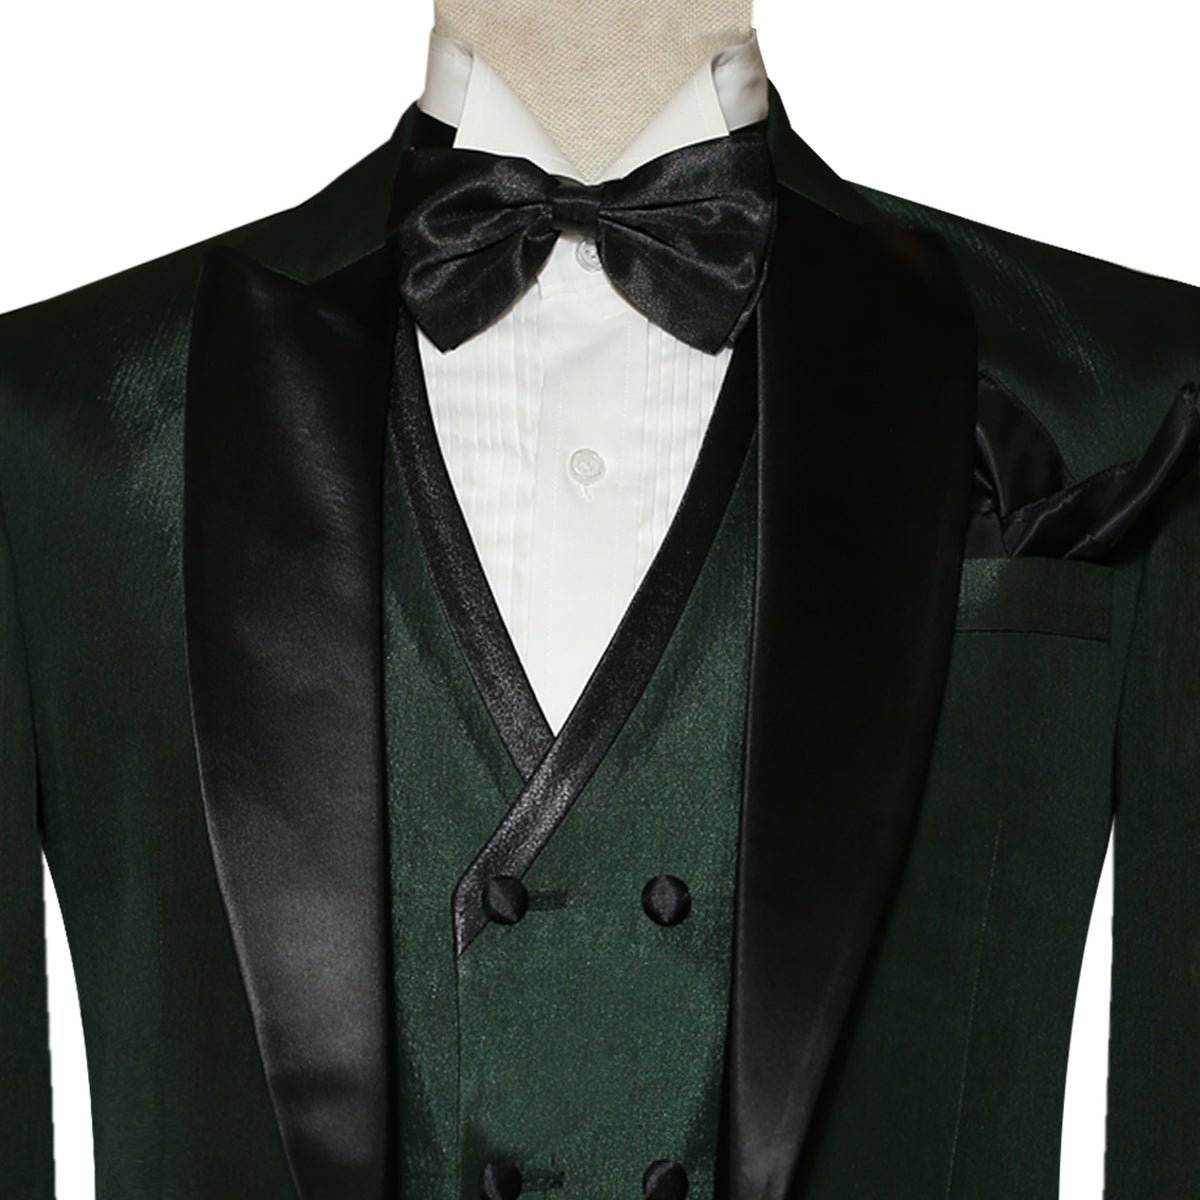 Forest Green Tuxedo Suit with Black Shawl Collar – Uomo Attire